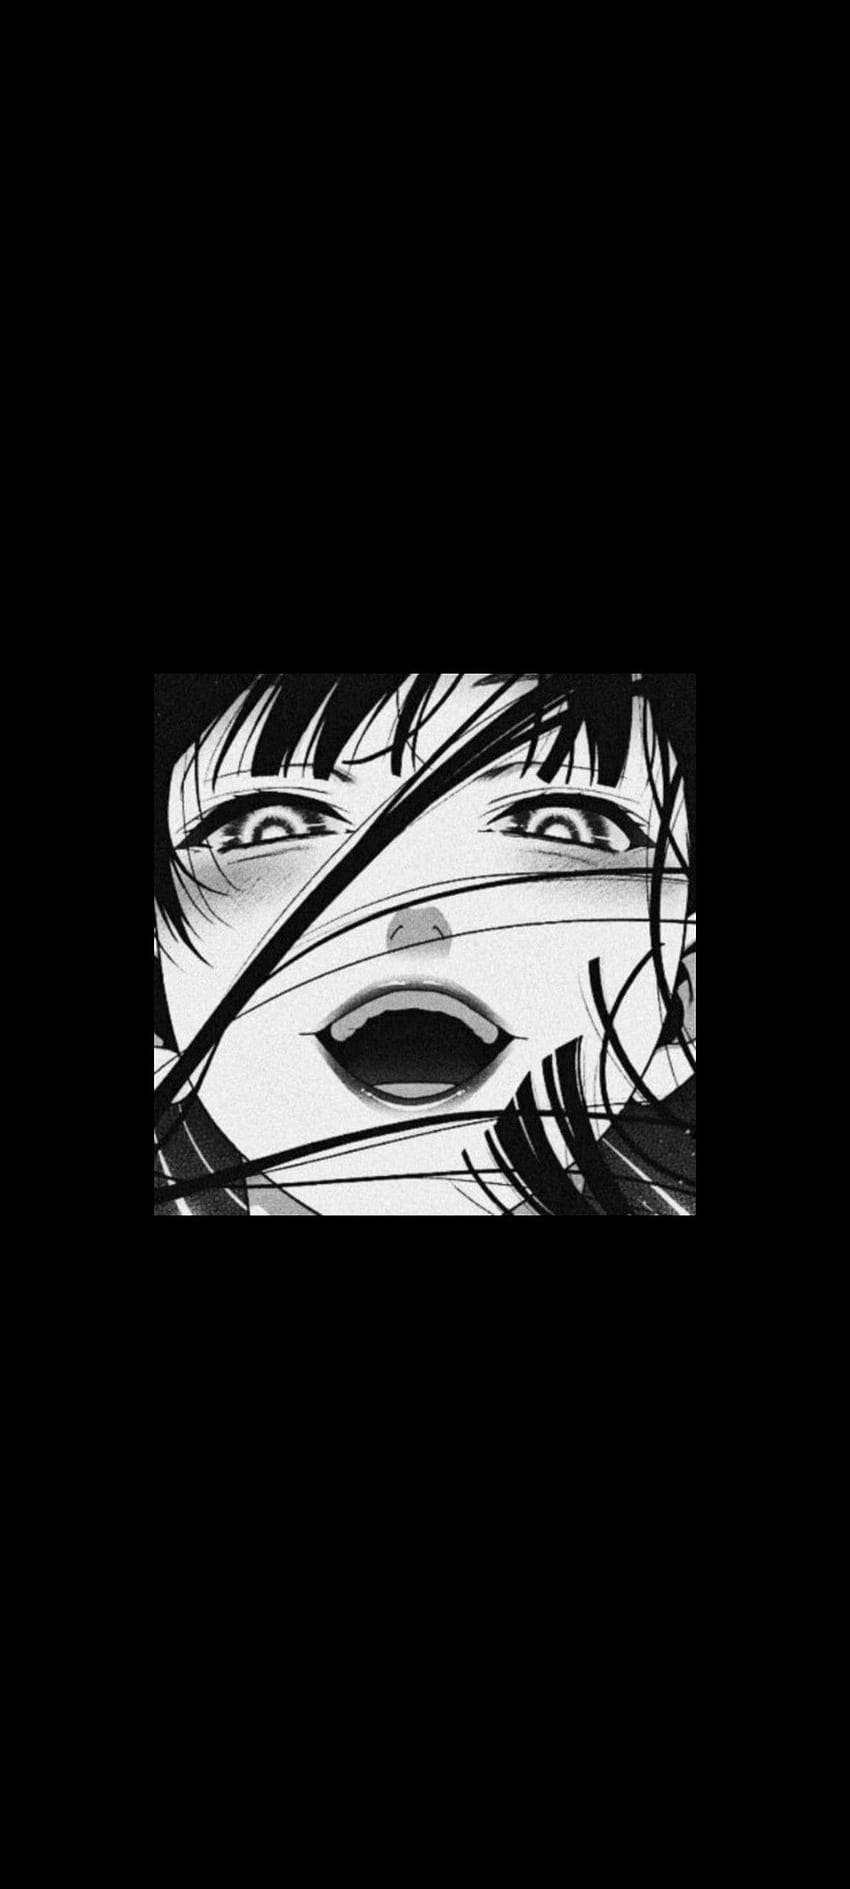 Kakegurui black white aeshetic Tumblr, anime aesthetic black and white ...